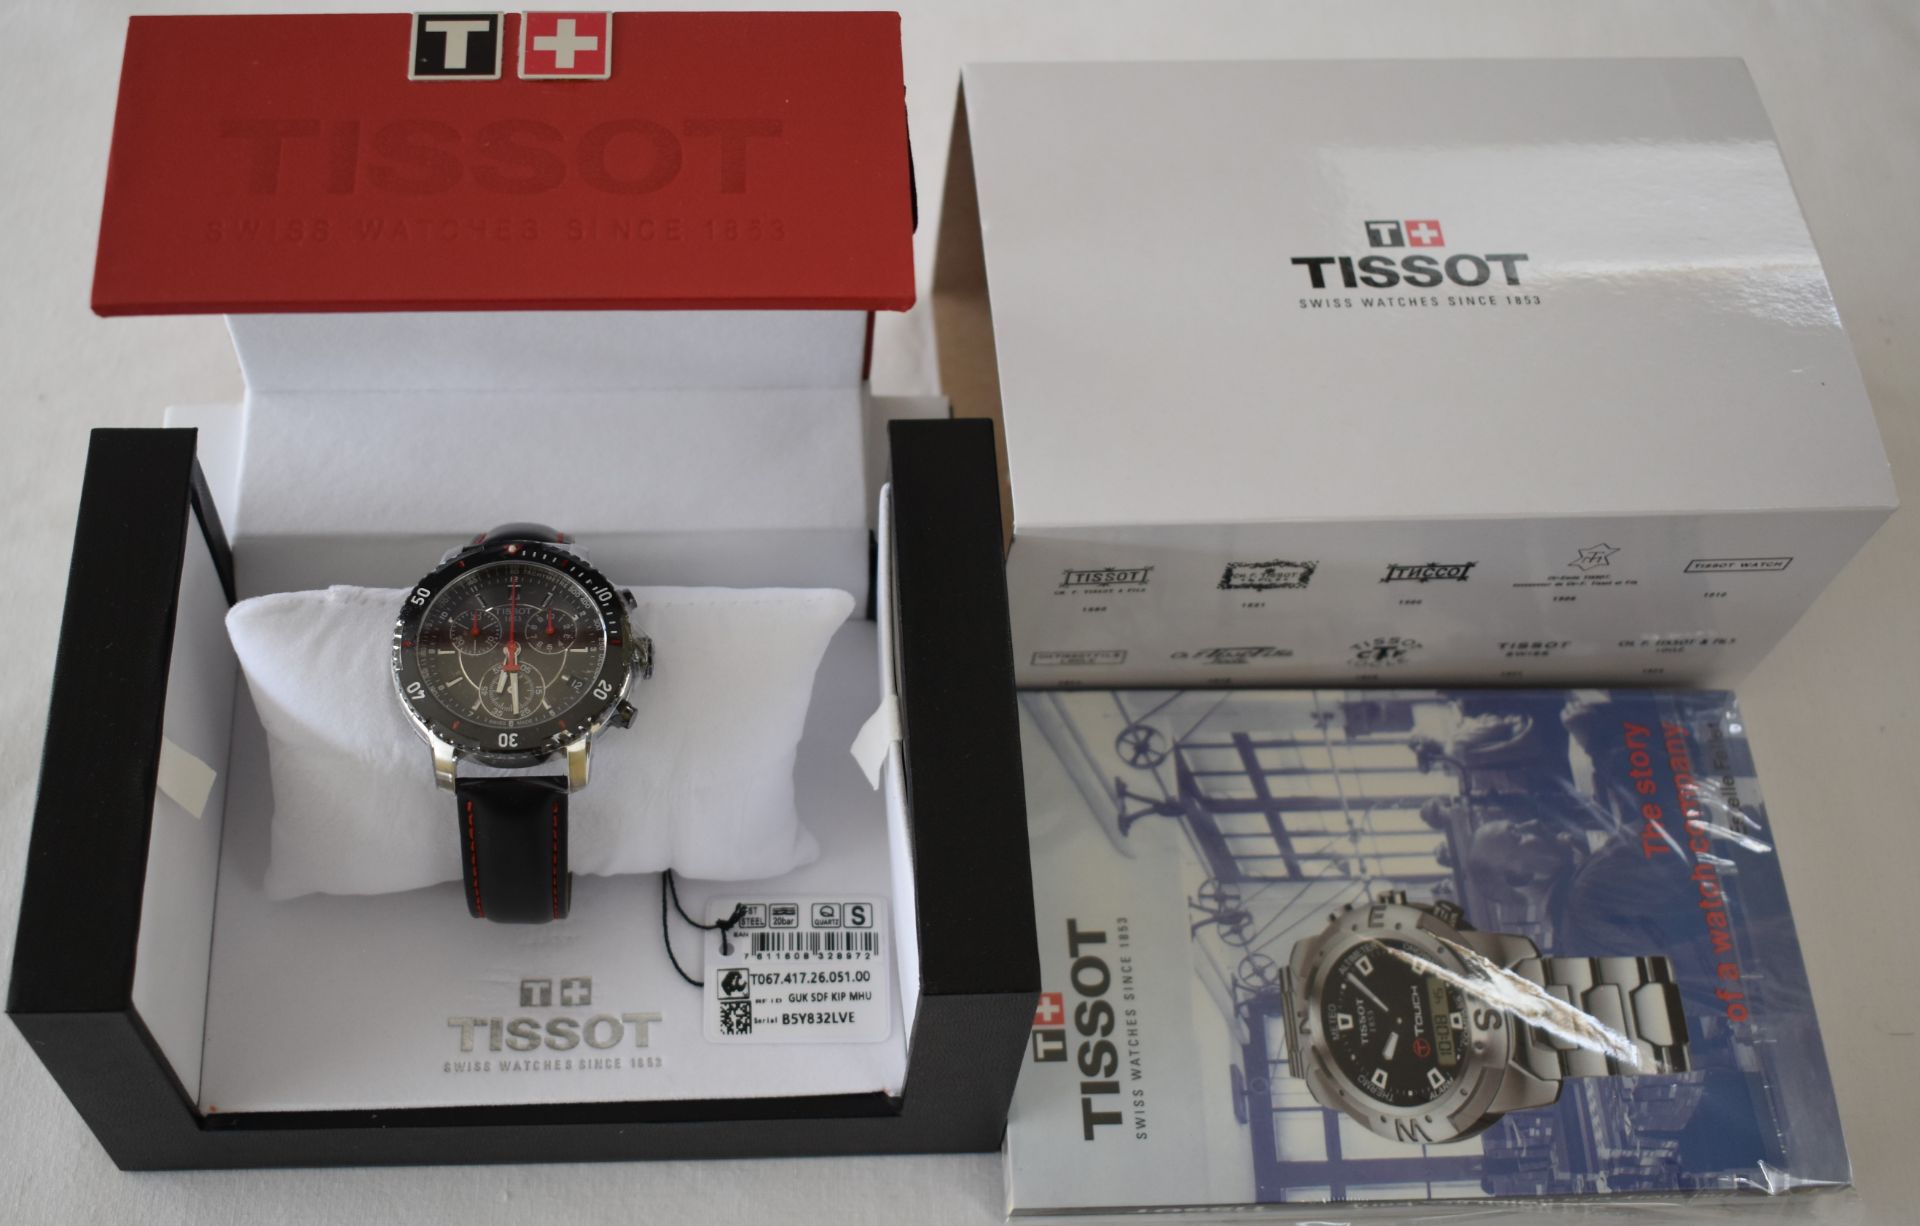 Tissot Men's watch TO67.417.26.051.00 - Image 3 of 3